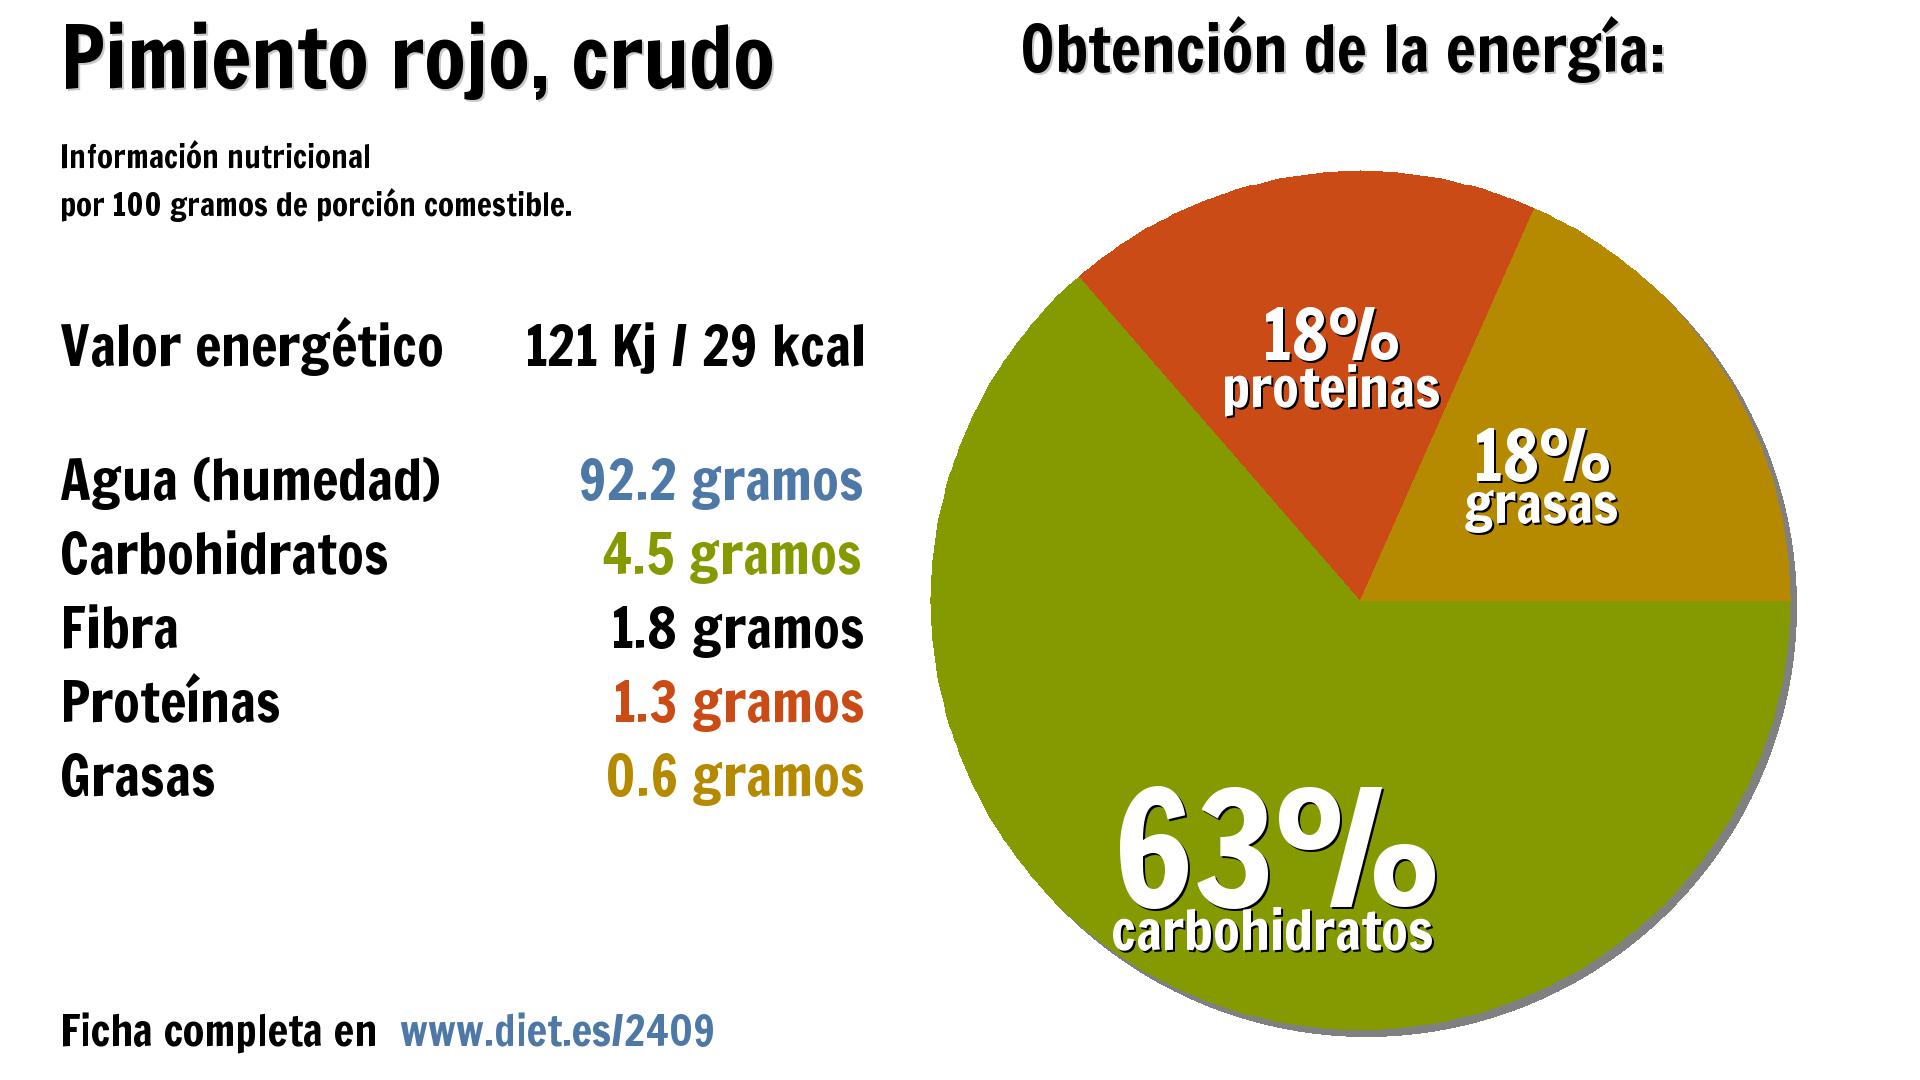 Pimiento rojo, crudo: energía 121 Kj, agua 92 g., carbohidratos 5 g., fibra 2 g., proteínas 1 g. y grasas 1 g.